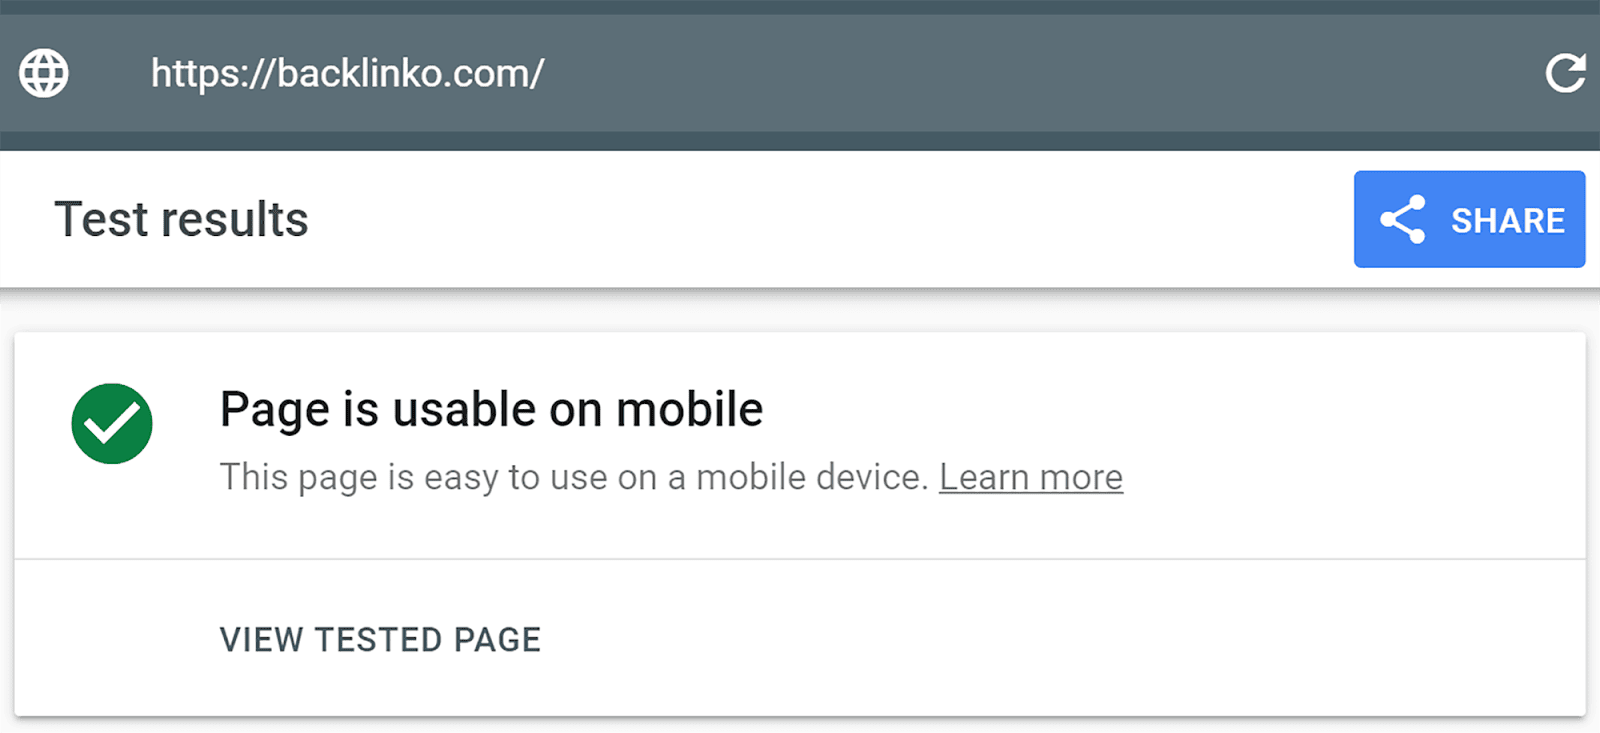 Page usable on mobile